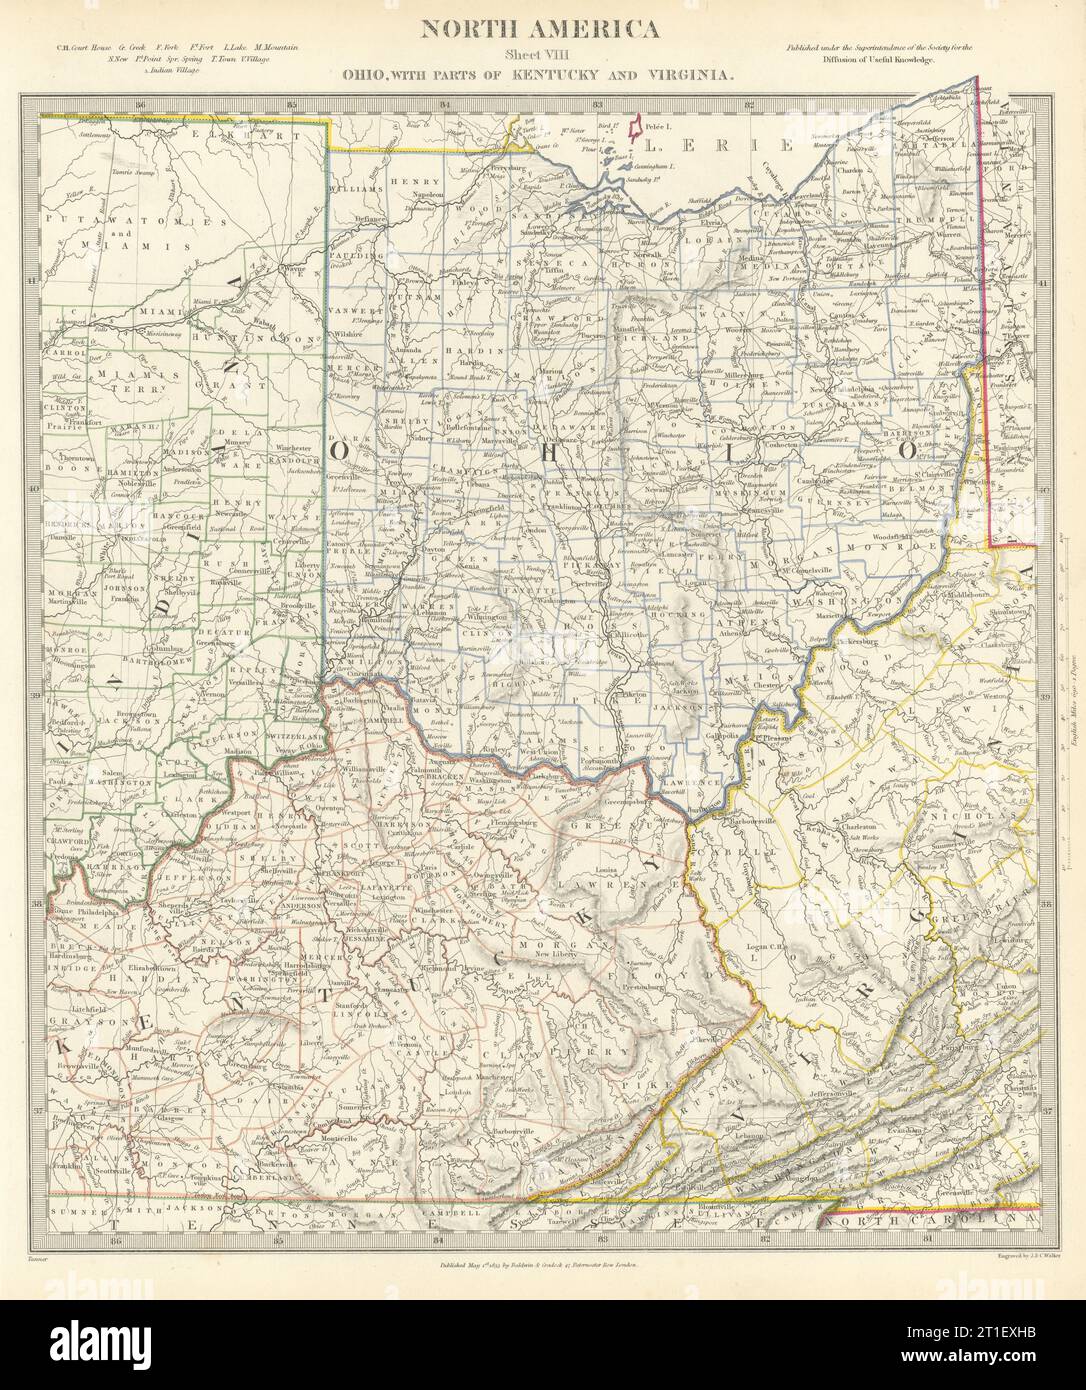 USA. Ohio with parts of Kentucky, Virginia & Indiana. Counties. SDUK 1844 map Stock Photo